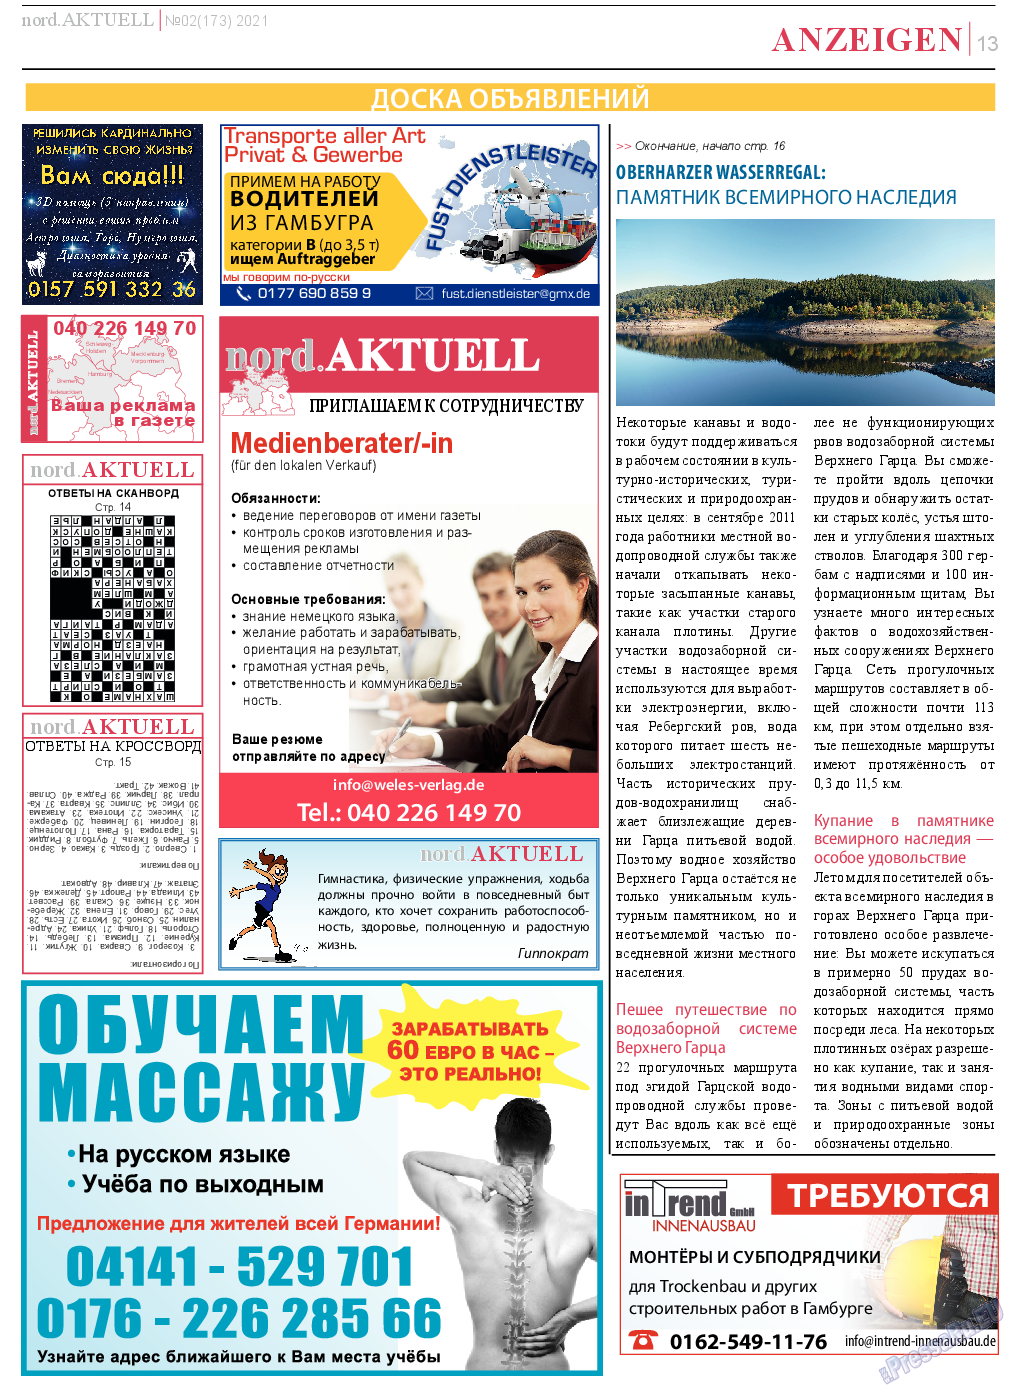 nord.Aktuell, газета. 2021 №2 стр.13